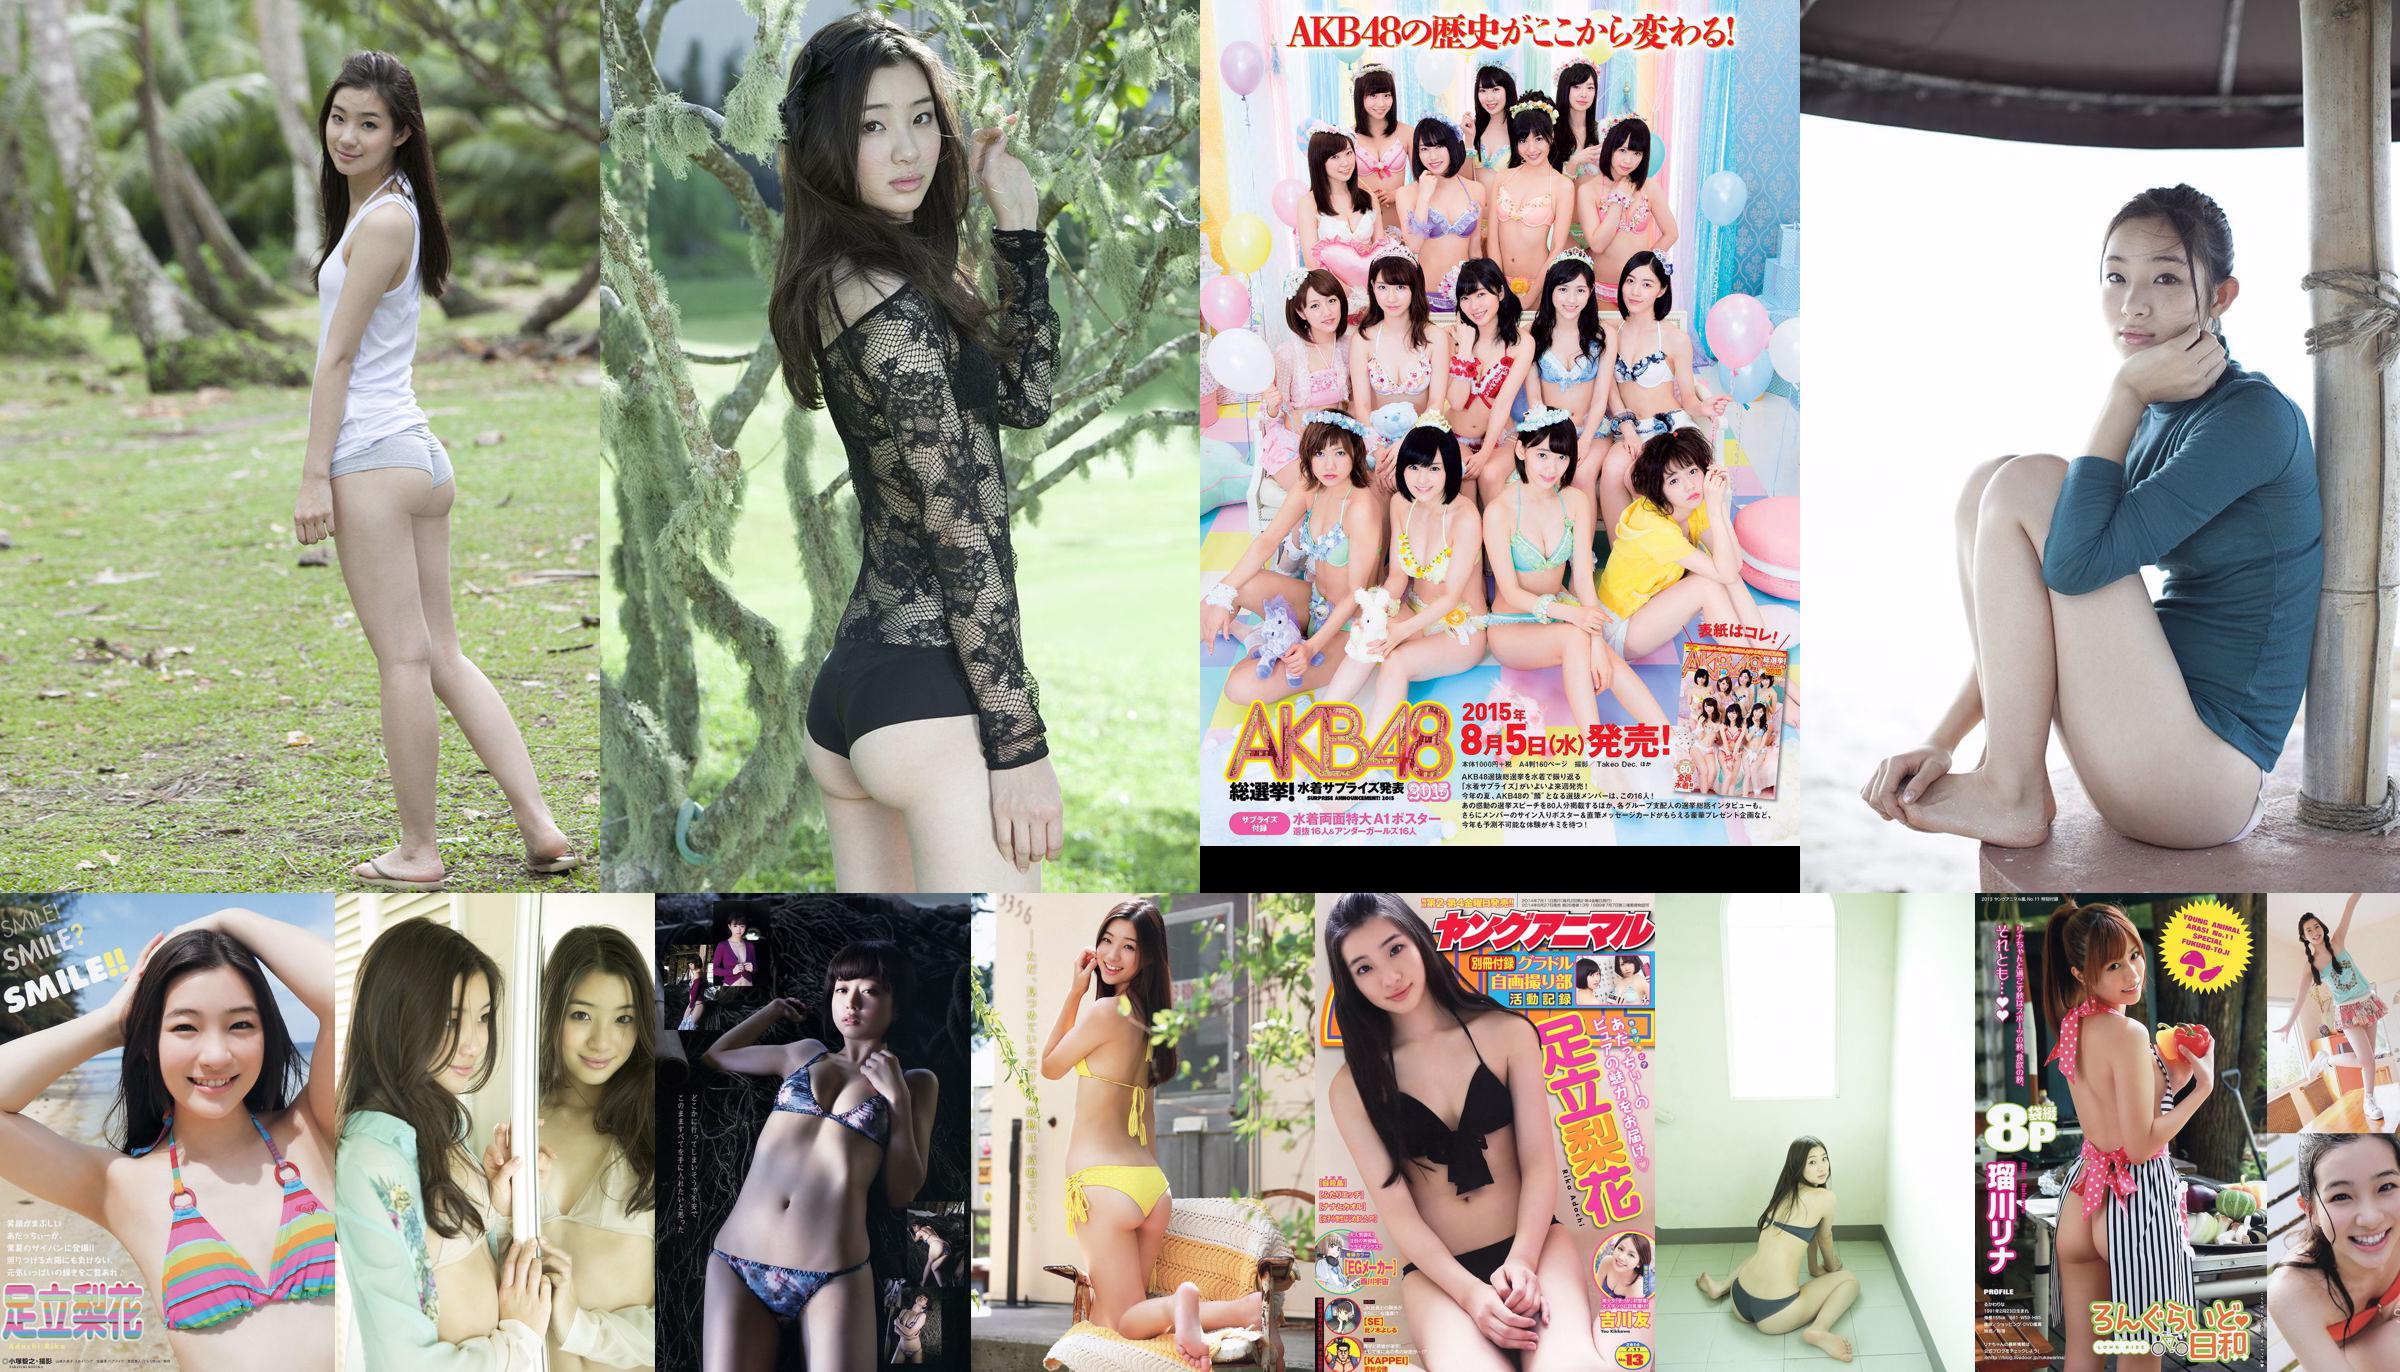 Adachi Rika, Kiya Takeshi, 瑠川リナ [Young Animal Arashi Special Issue] No.11 2013 Photo Magazine No.32cd2d Page 1